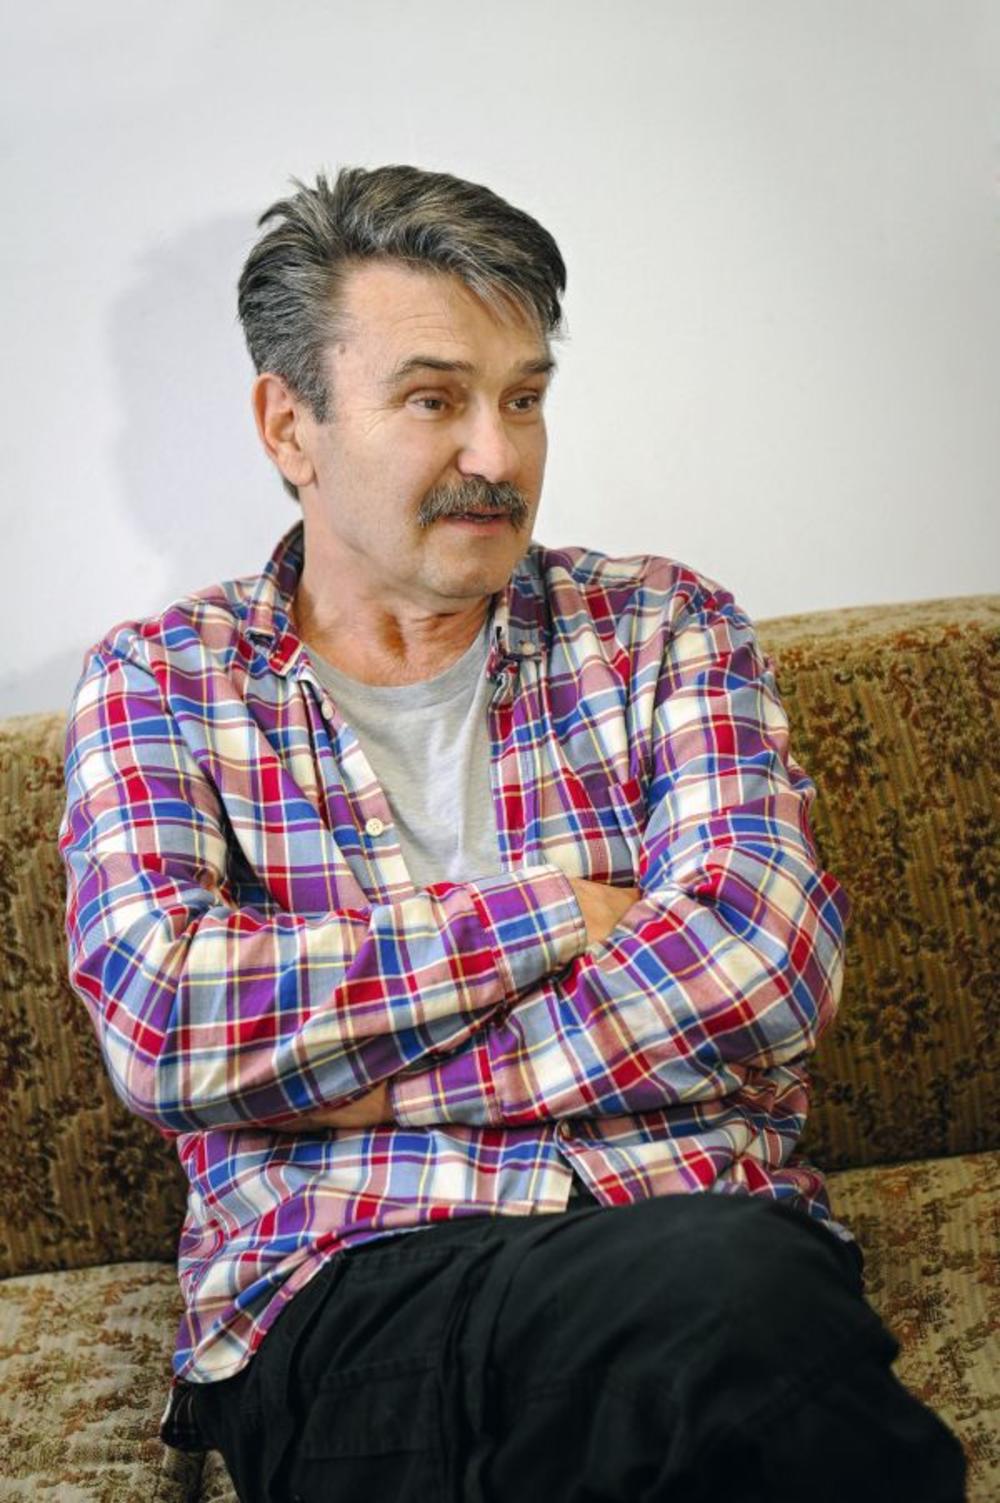 Jugoslovenski i hrvatski glumac Milan Štrljić je otac glumice Ive Štrljić